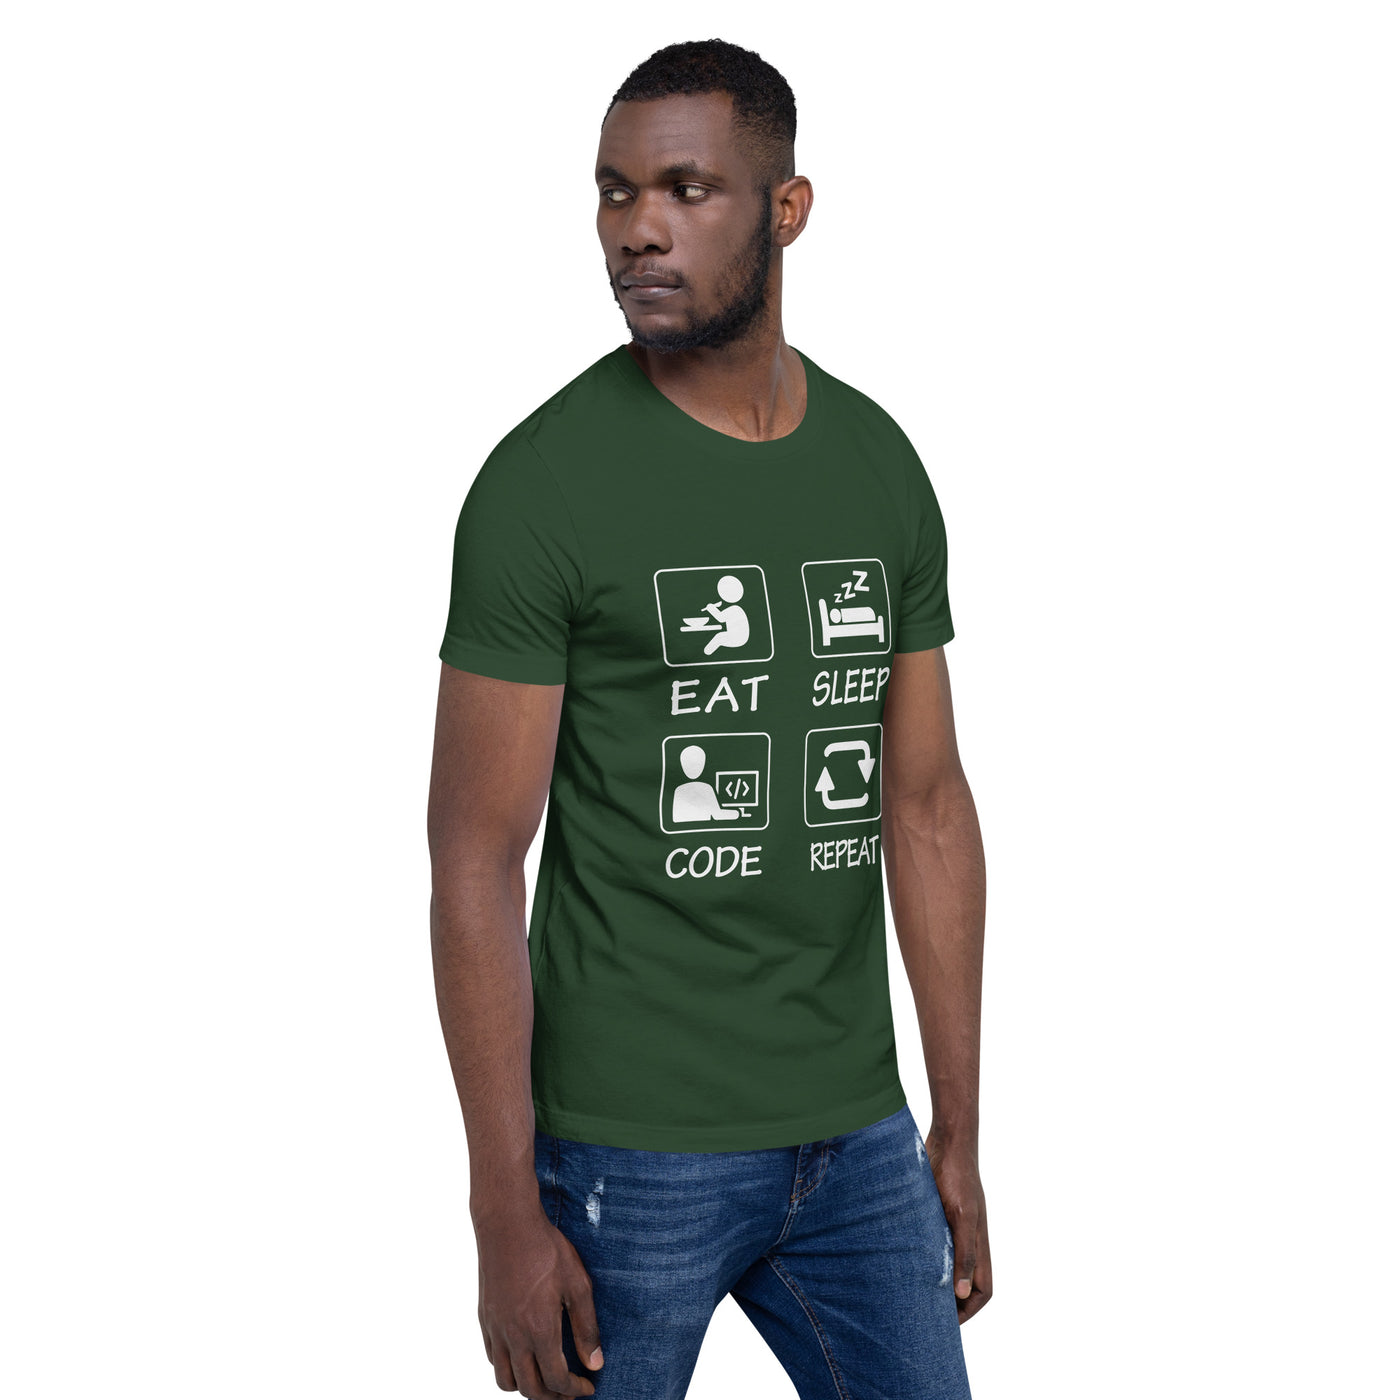 Eat, Sleep, Code, Repeat V1 - Unisex t-shirt